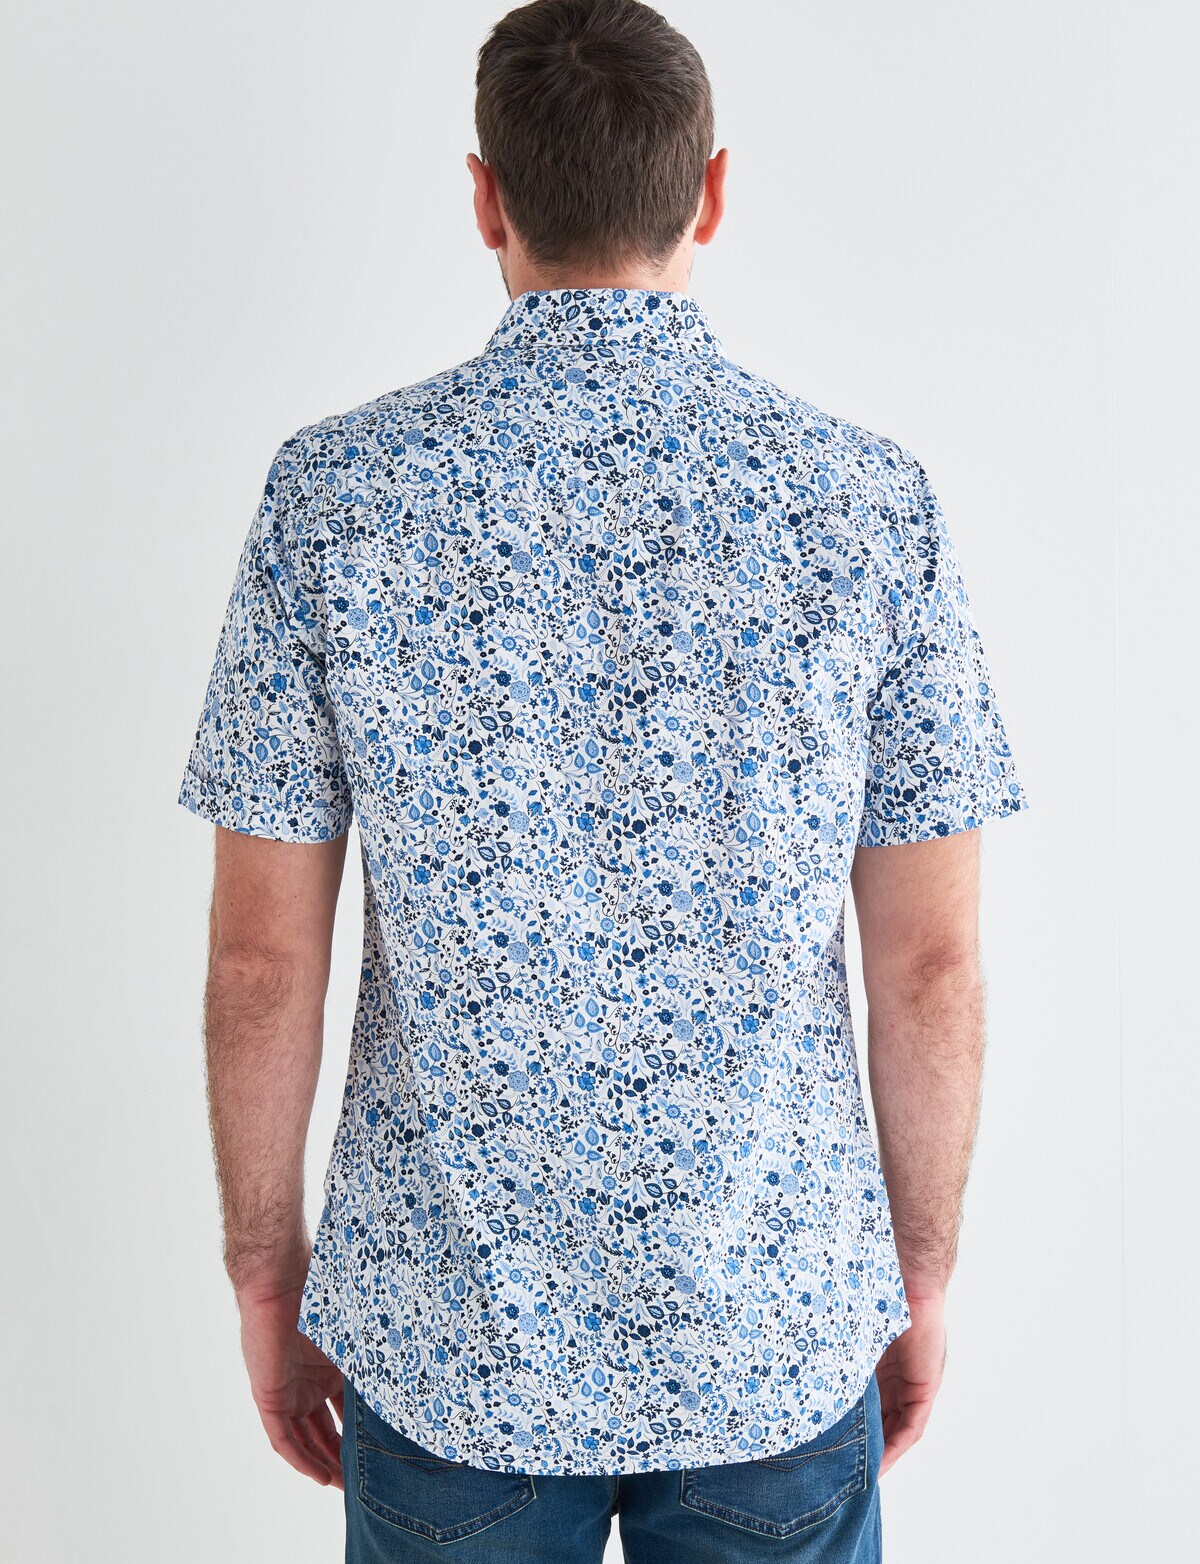 Chisel Botanical Print Short Sleeve Shirt, White & Blue - Casual Shirts